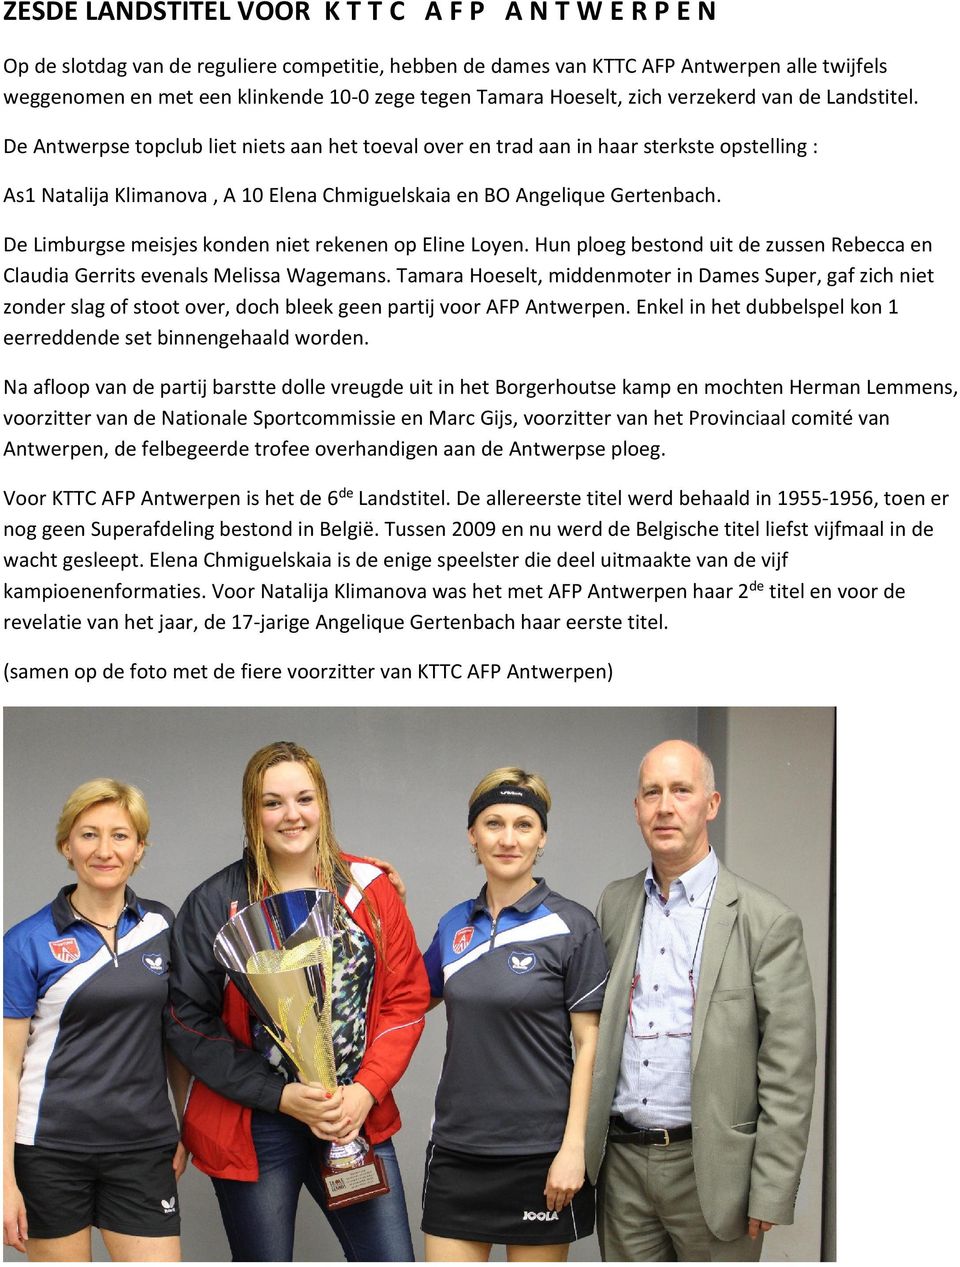 De Antwerpse topclub liet niets aan het toeval over en trad aan in haar sterkste opstelling : As1 Natalija Klimanova, A 10 Elena Chmiguelskaia en BO Angelique Gertenbach.